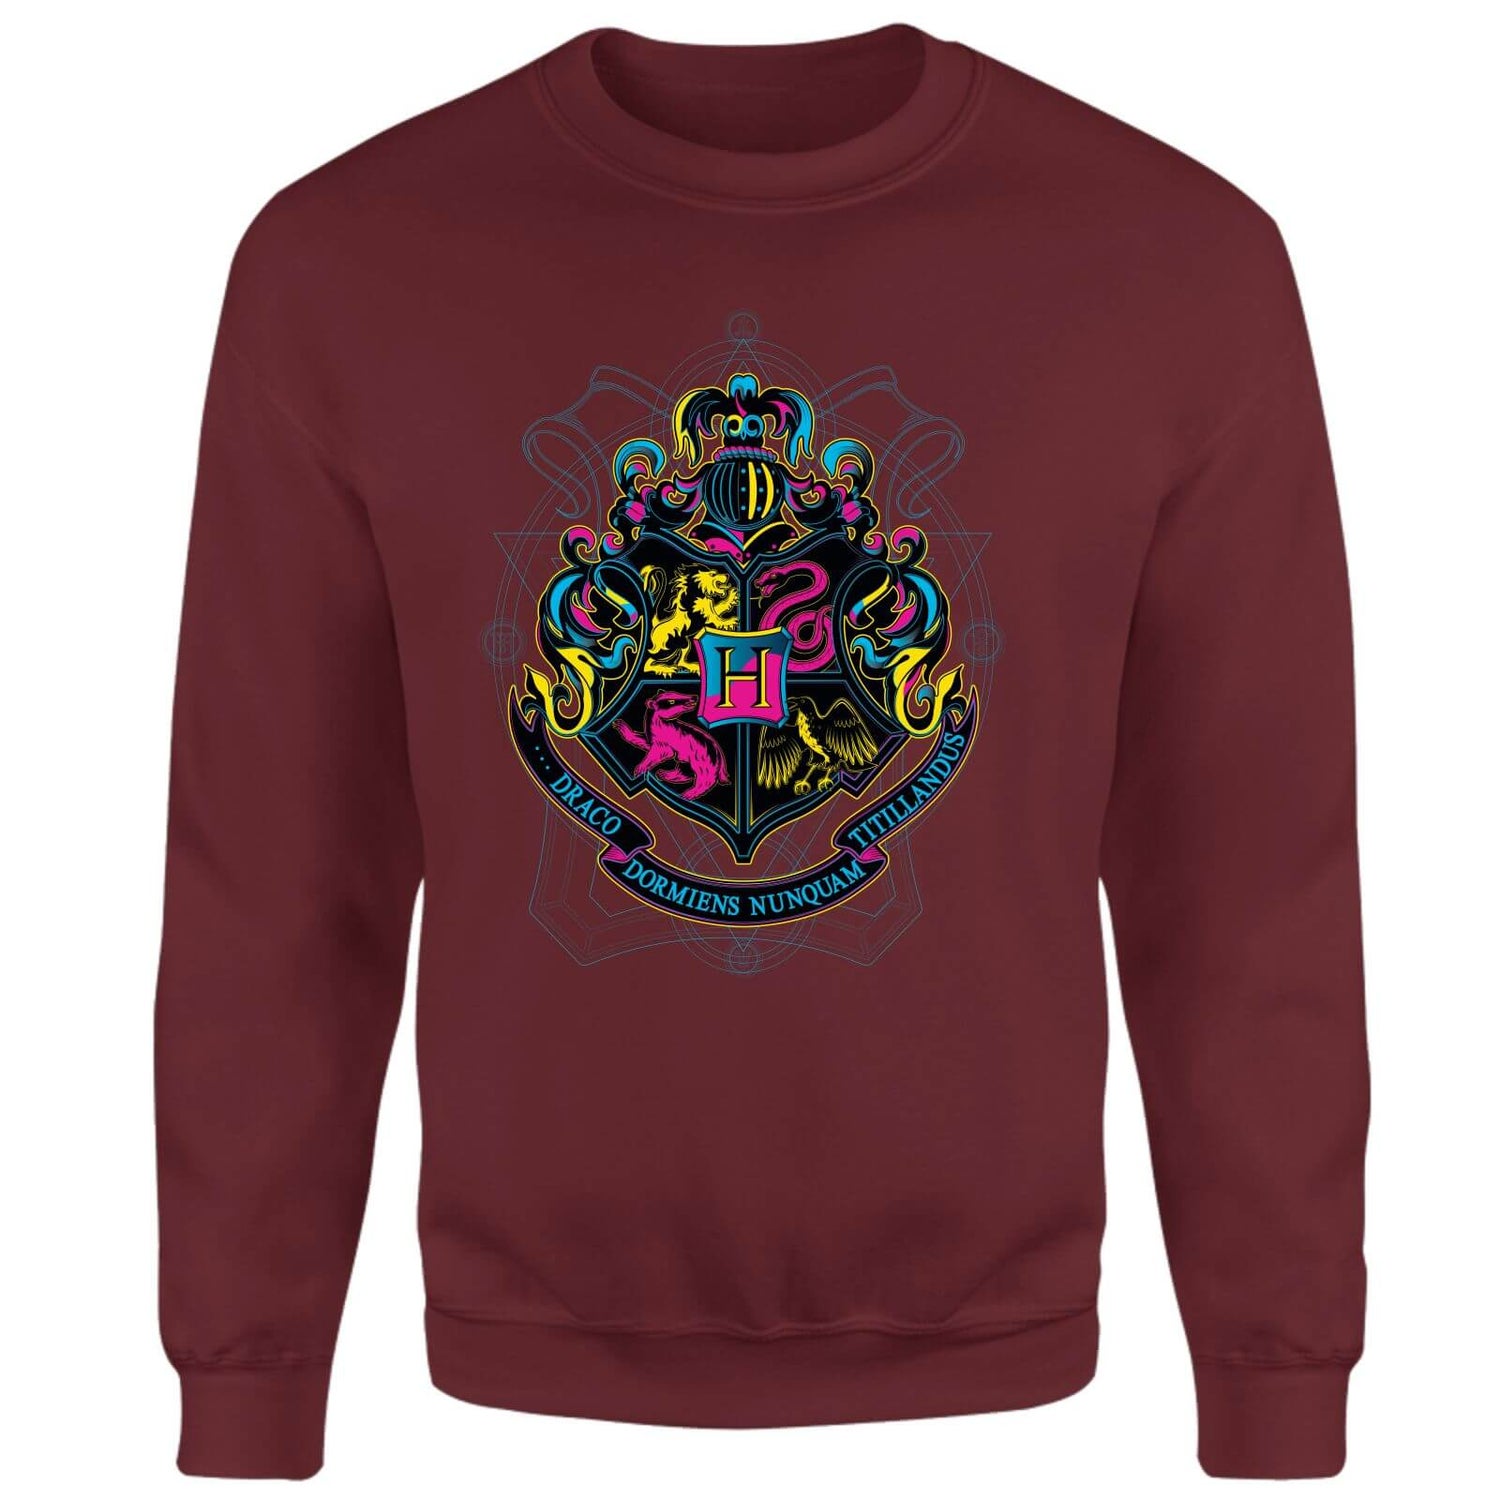 Harry Potter Hogwarts Neon Crest Sweatshirt - Burgundy